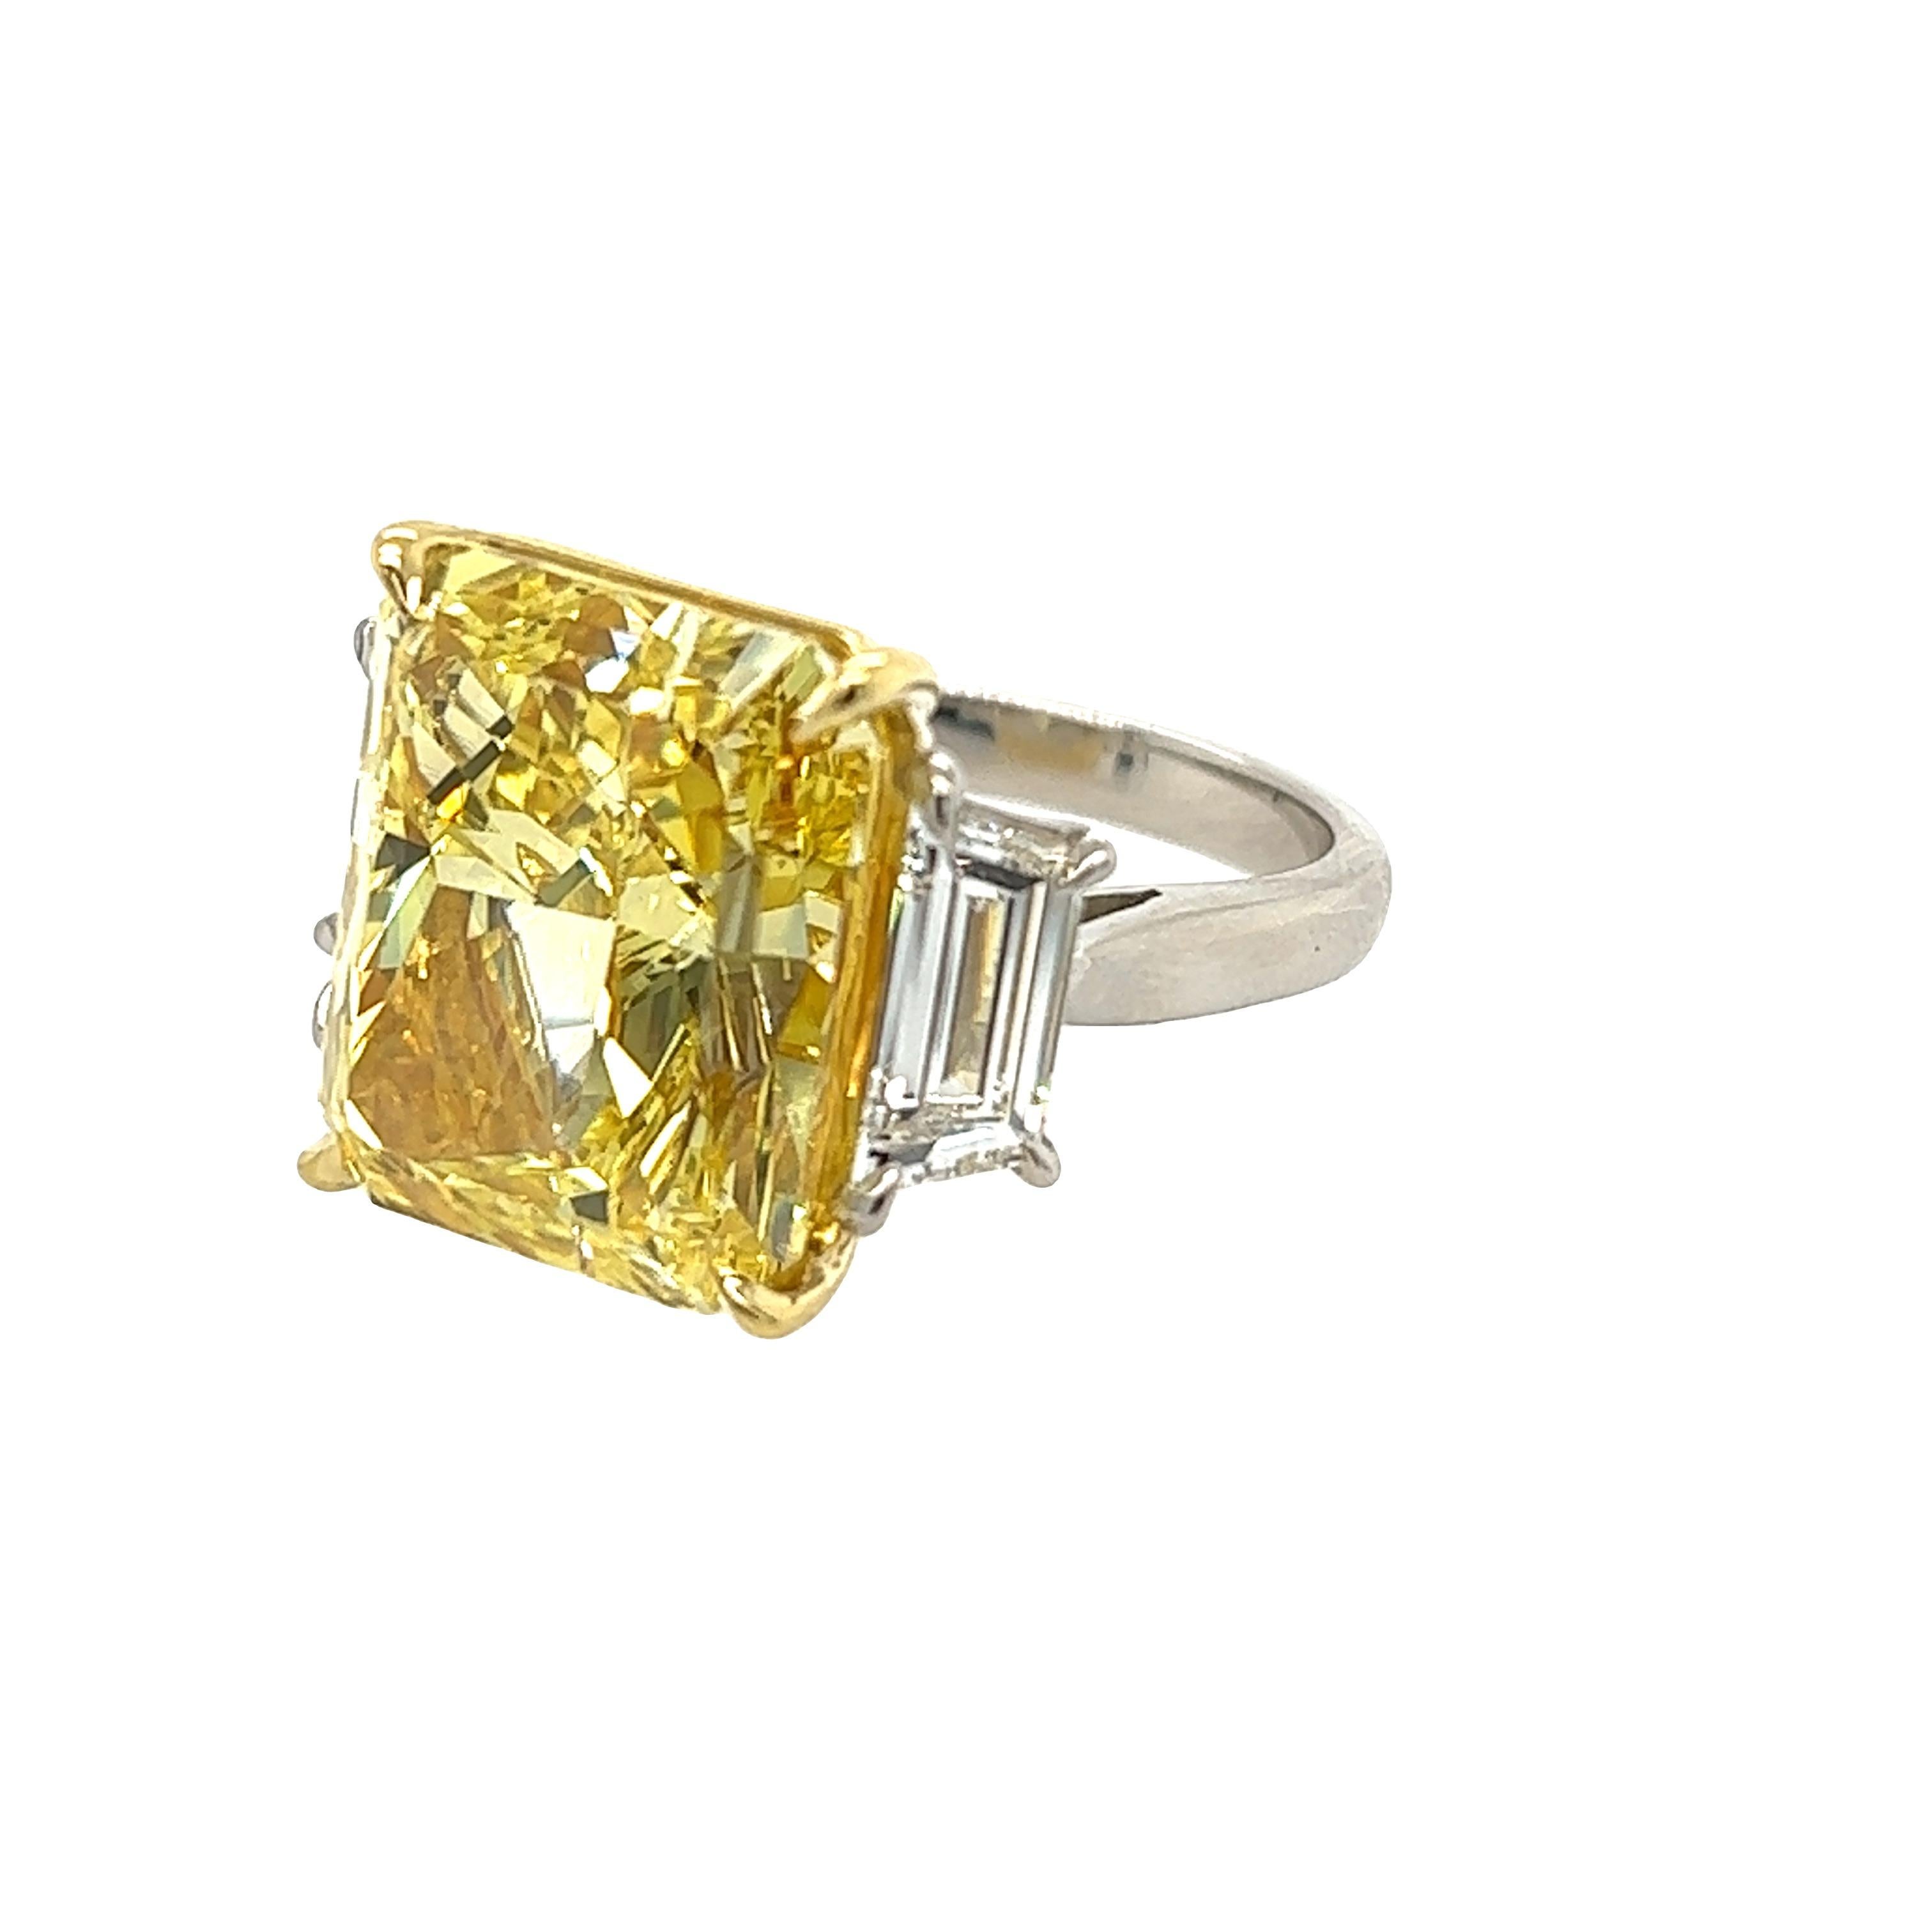 Radiant Cut David Rosenberg 15.38 Radiant Fancy Intense Yellow VS2 GIA Diamond Engagement